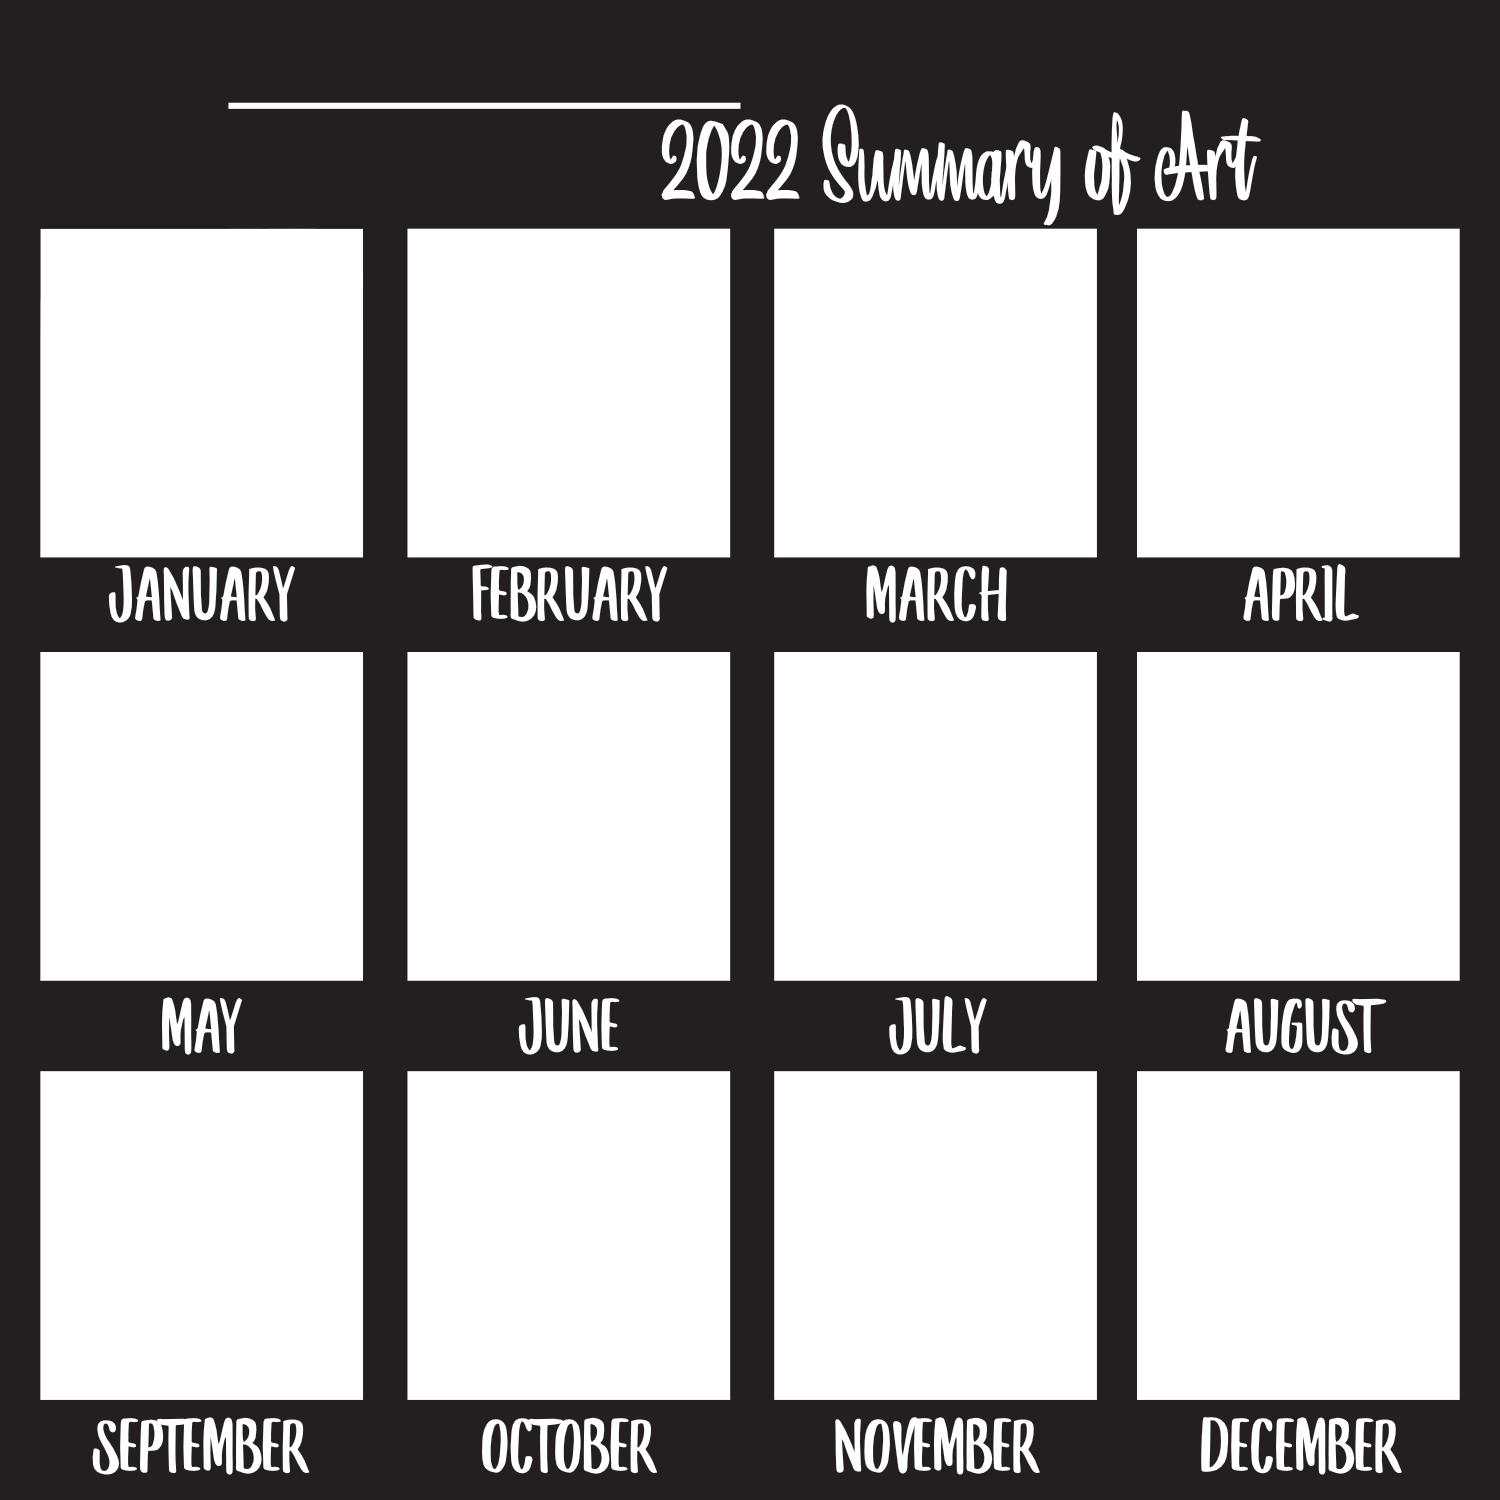 2022 Art Summary (Template) by TheArtArmature on DeviantArt